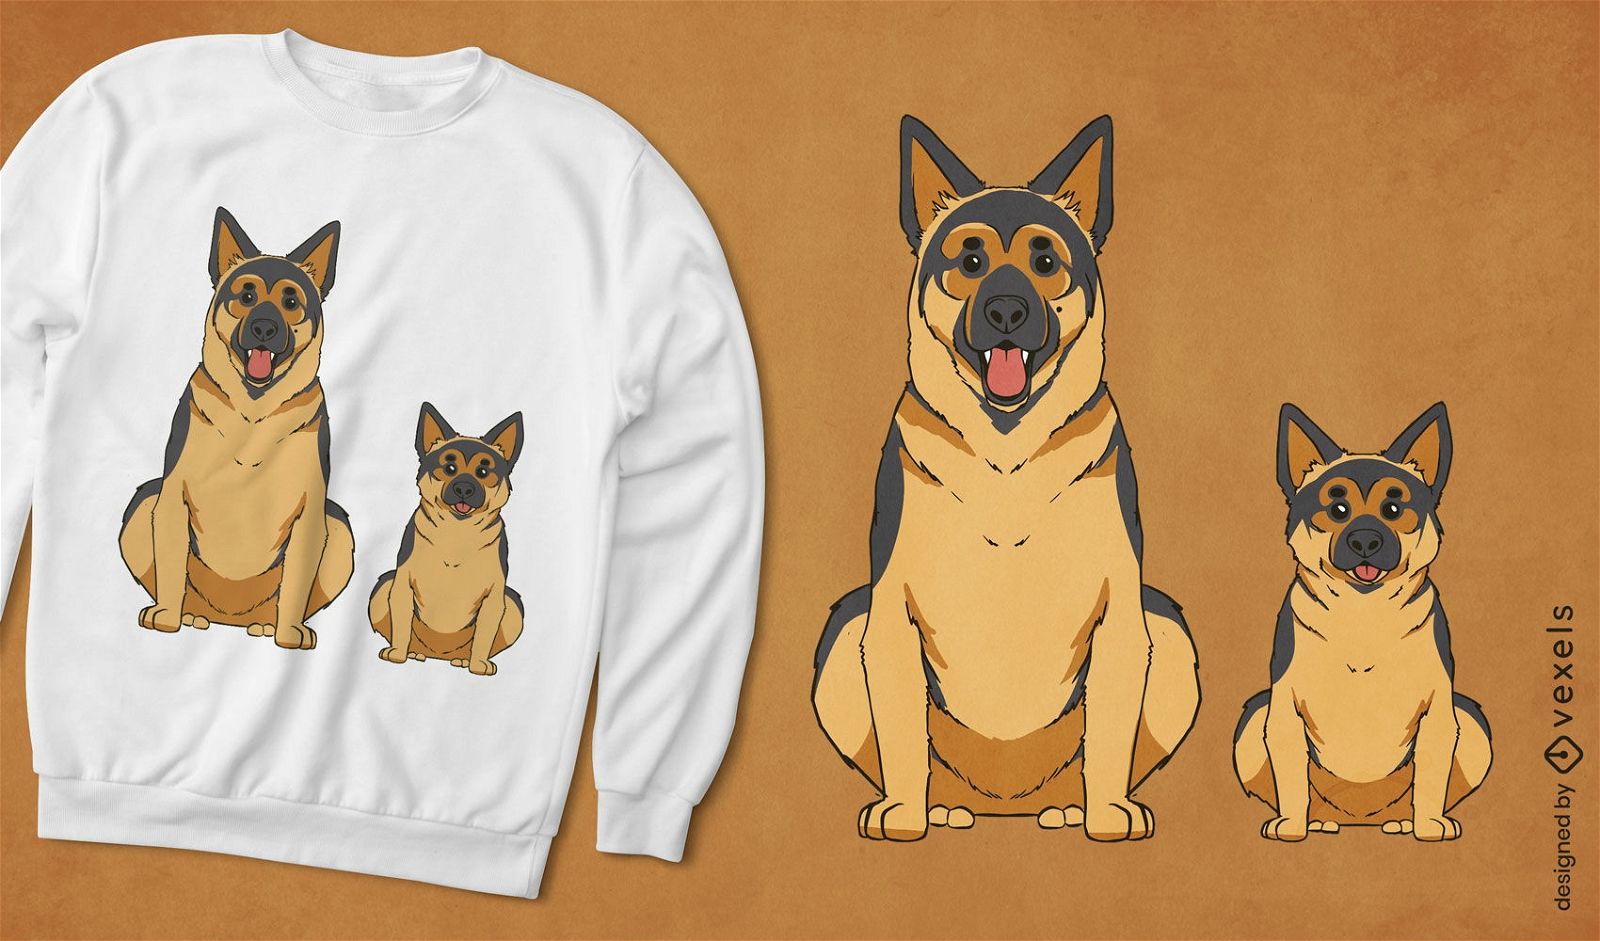 German shepherd dogs t-shirt design